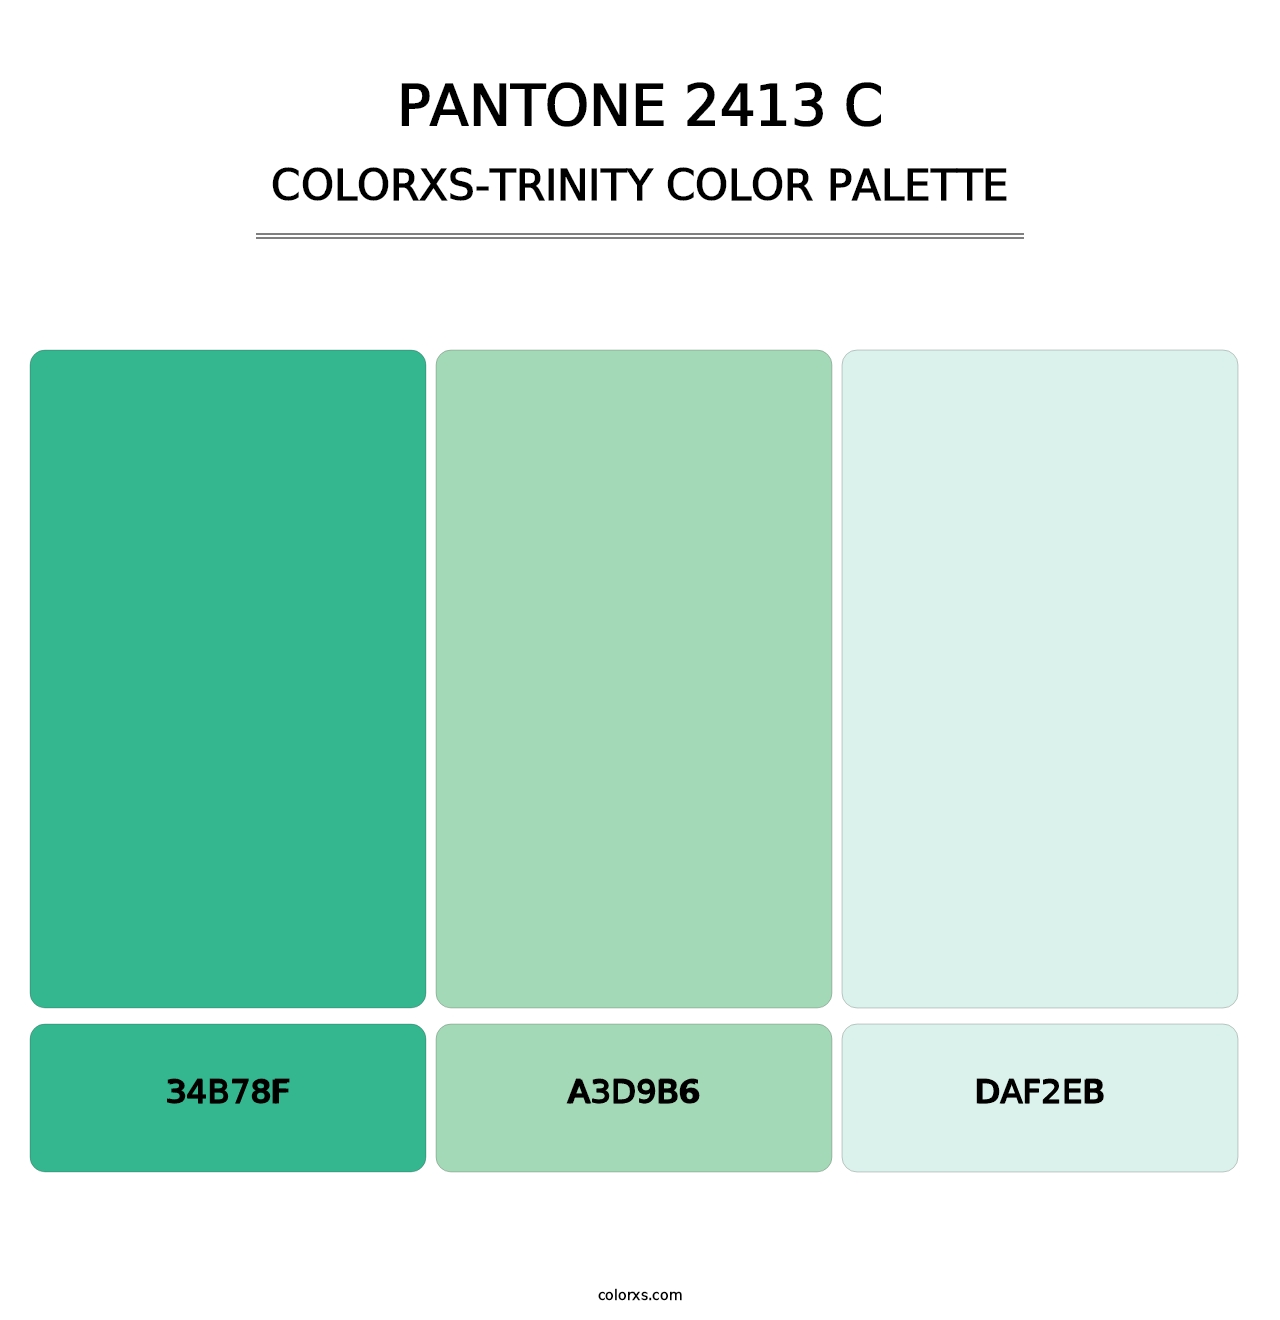 PANTONE 2413 C - Colorxs Trinity Palette